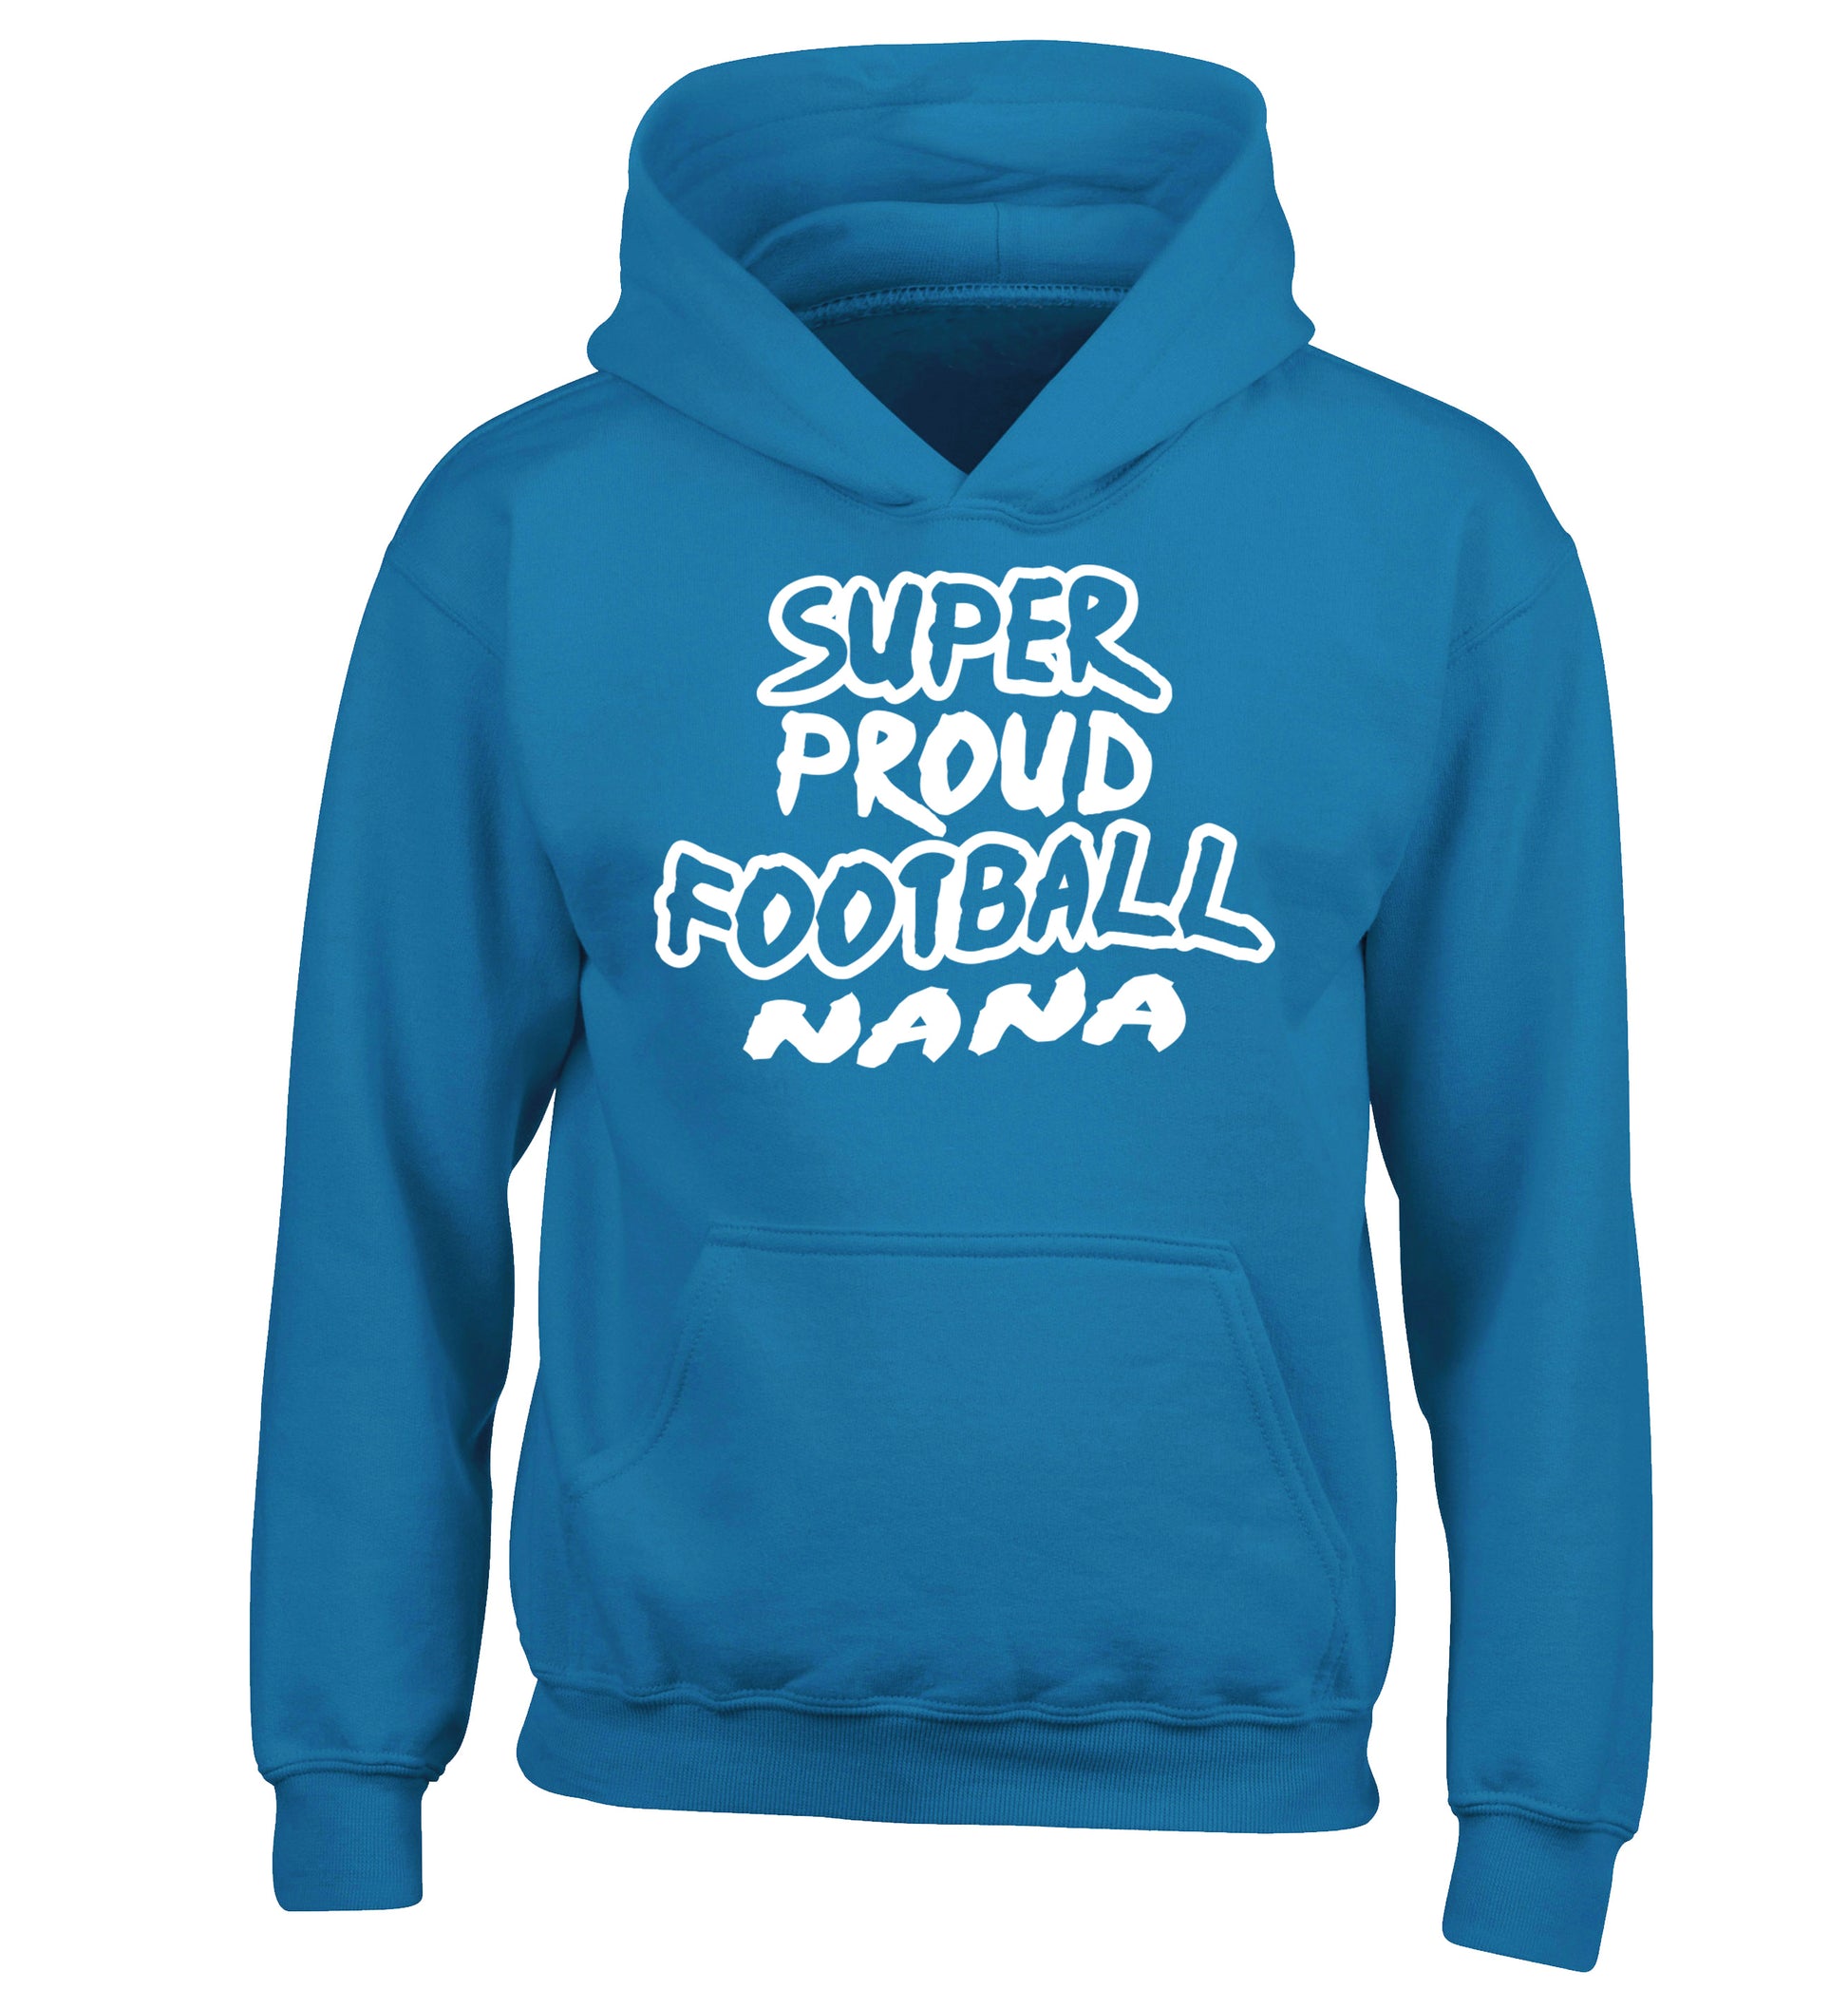 Super proud football nana children's blue hoodie 12-14 Years